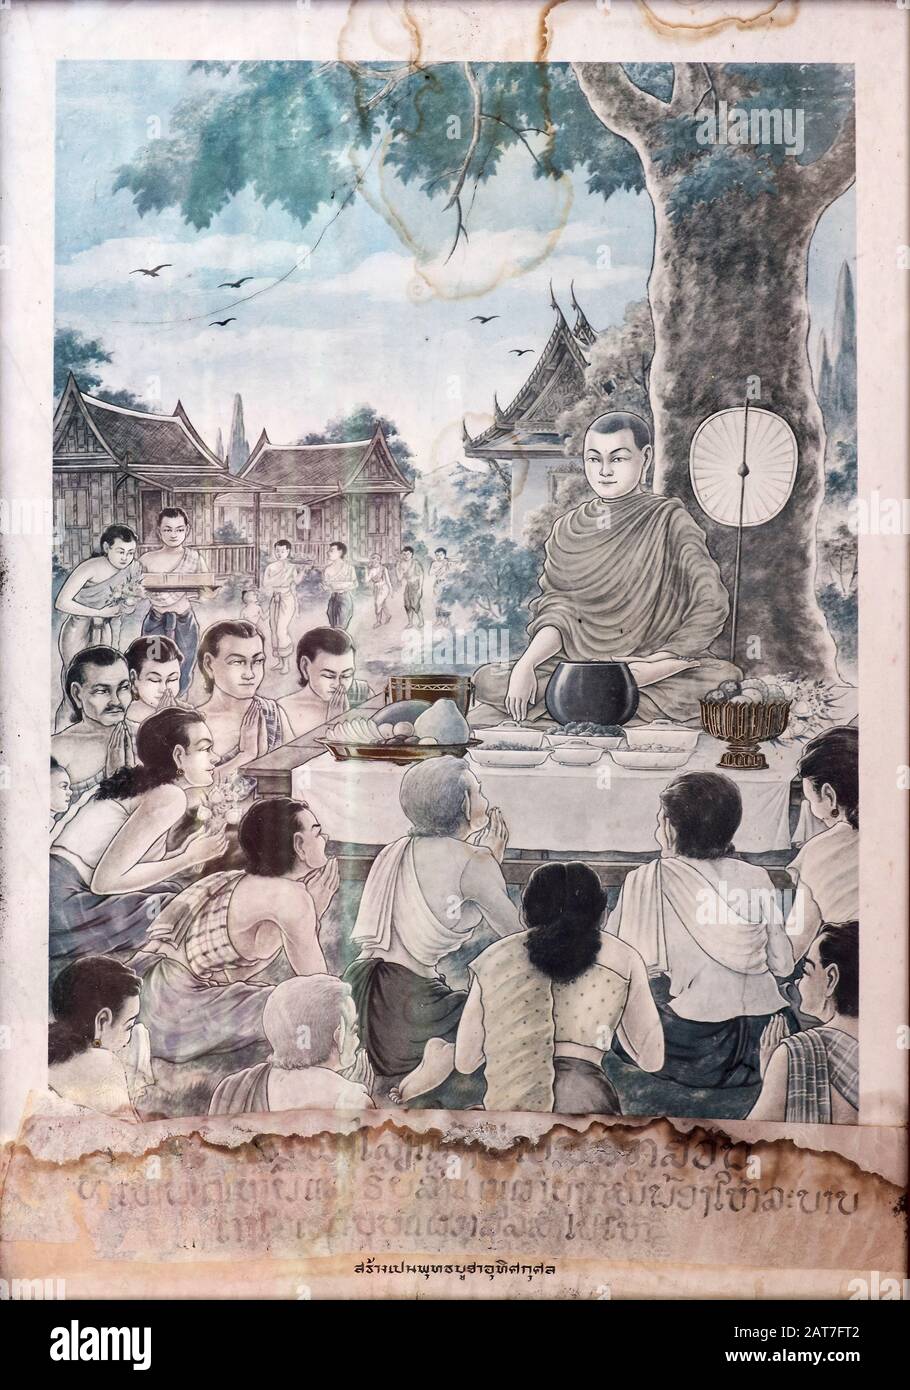 Tratto dal libro Phra Malaya intitolato Making Merit offrendo cibo a un monaco, Tempio Wat Sen Soukharam, Luang Prabang, Laos Foto Stock